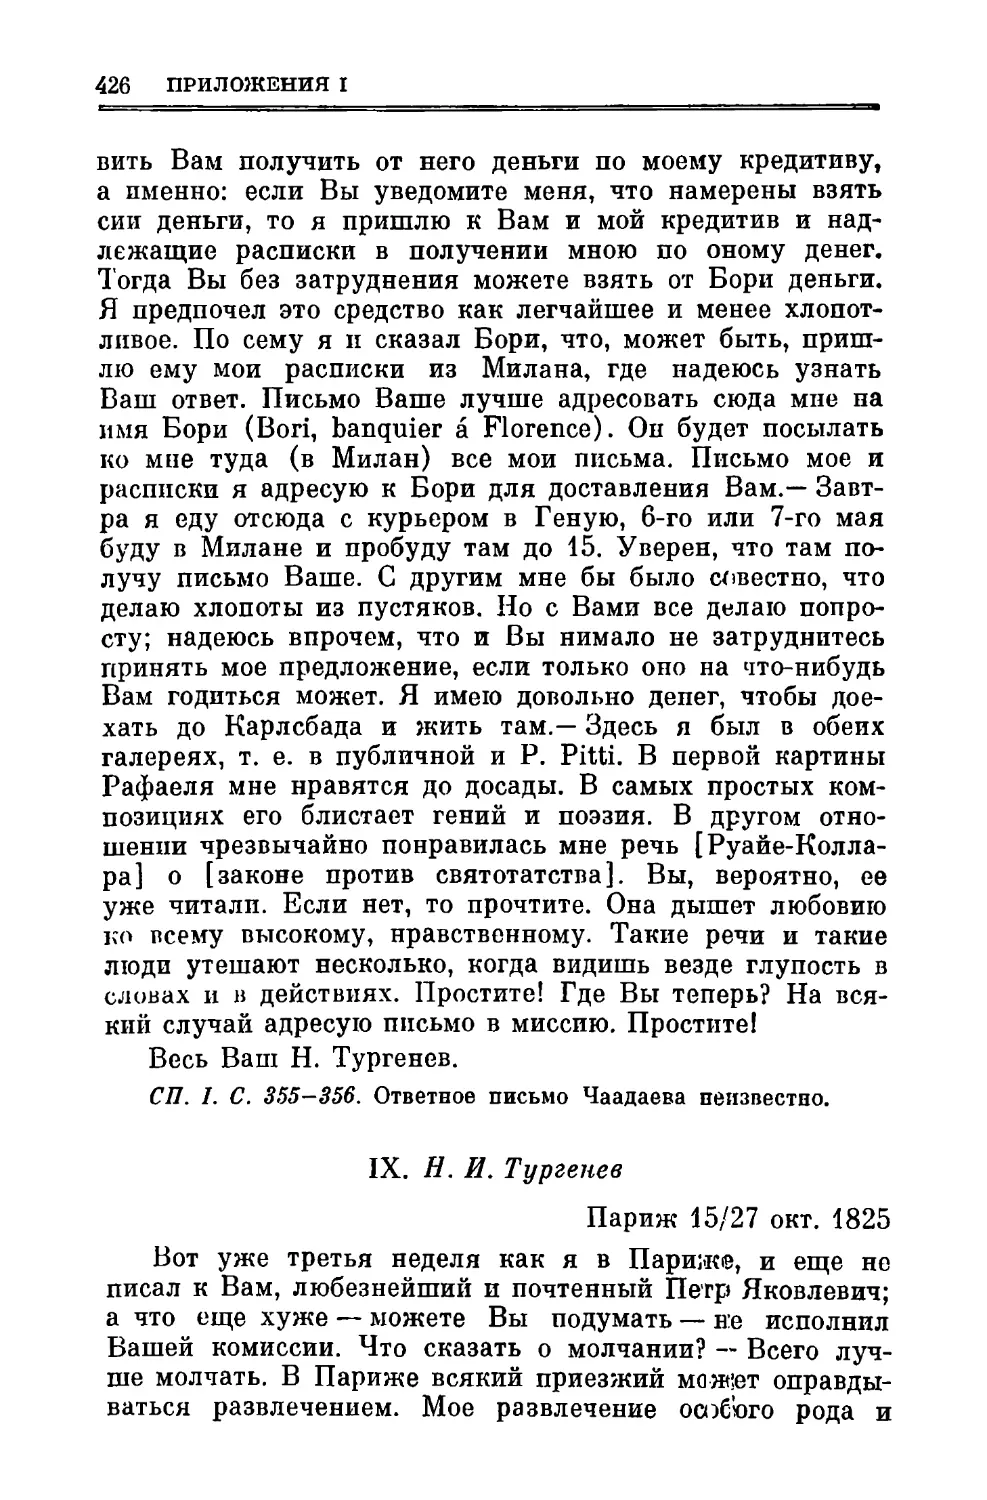 IX. Тургенев Н.И. 15/27.XI.1825